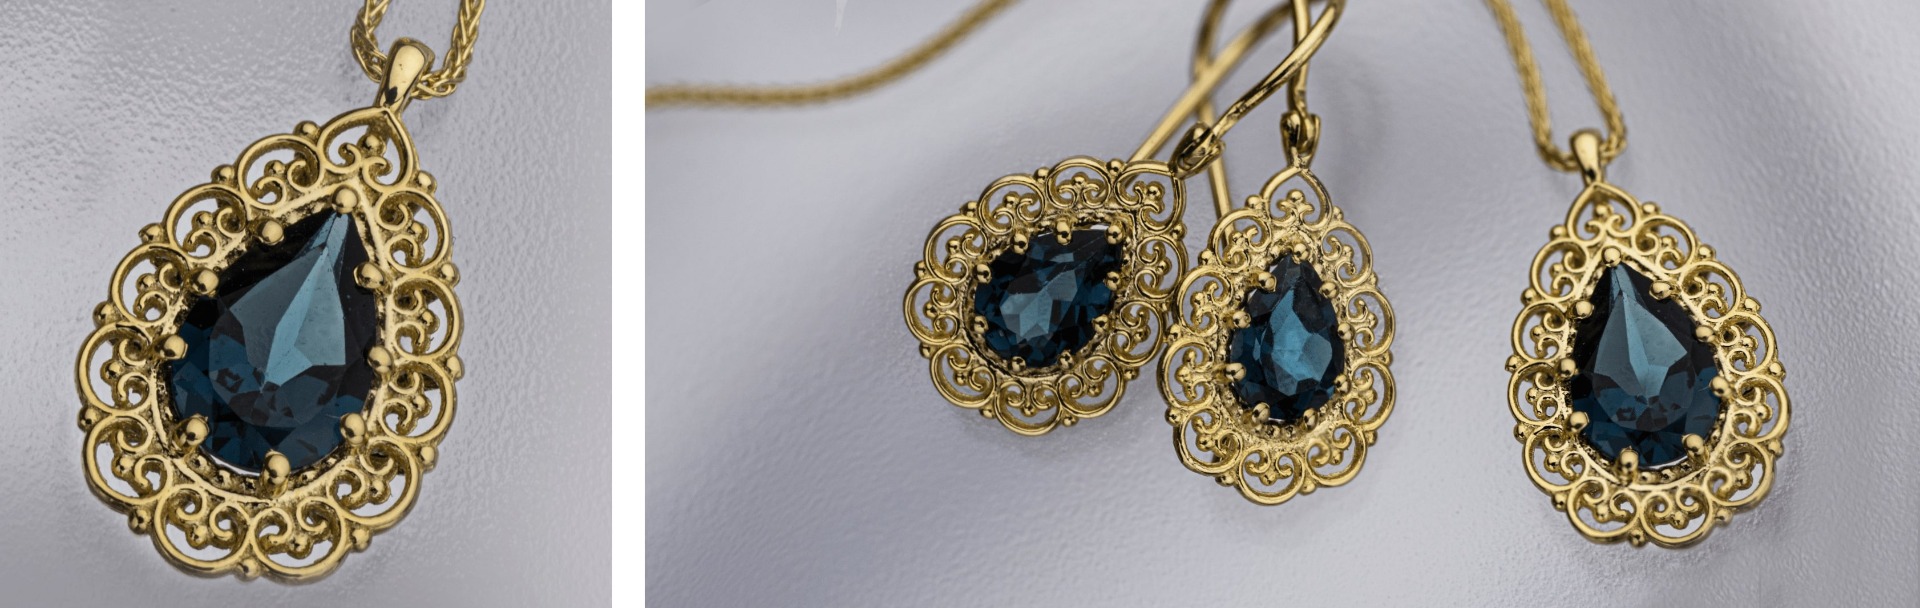 14K Gold Jewelry with Blue Topaz and Diamonds